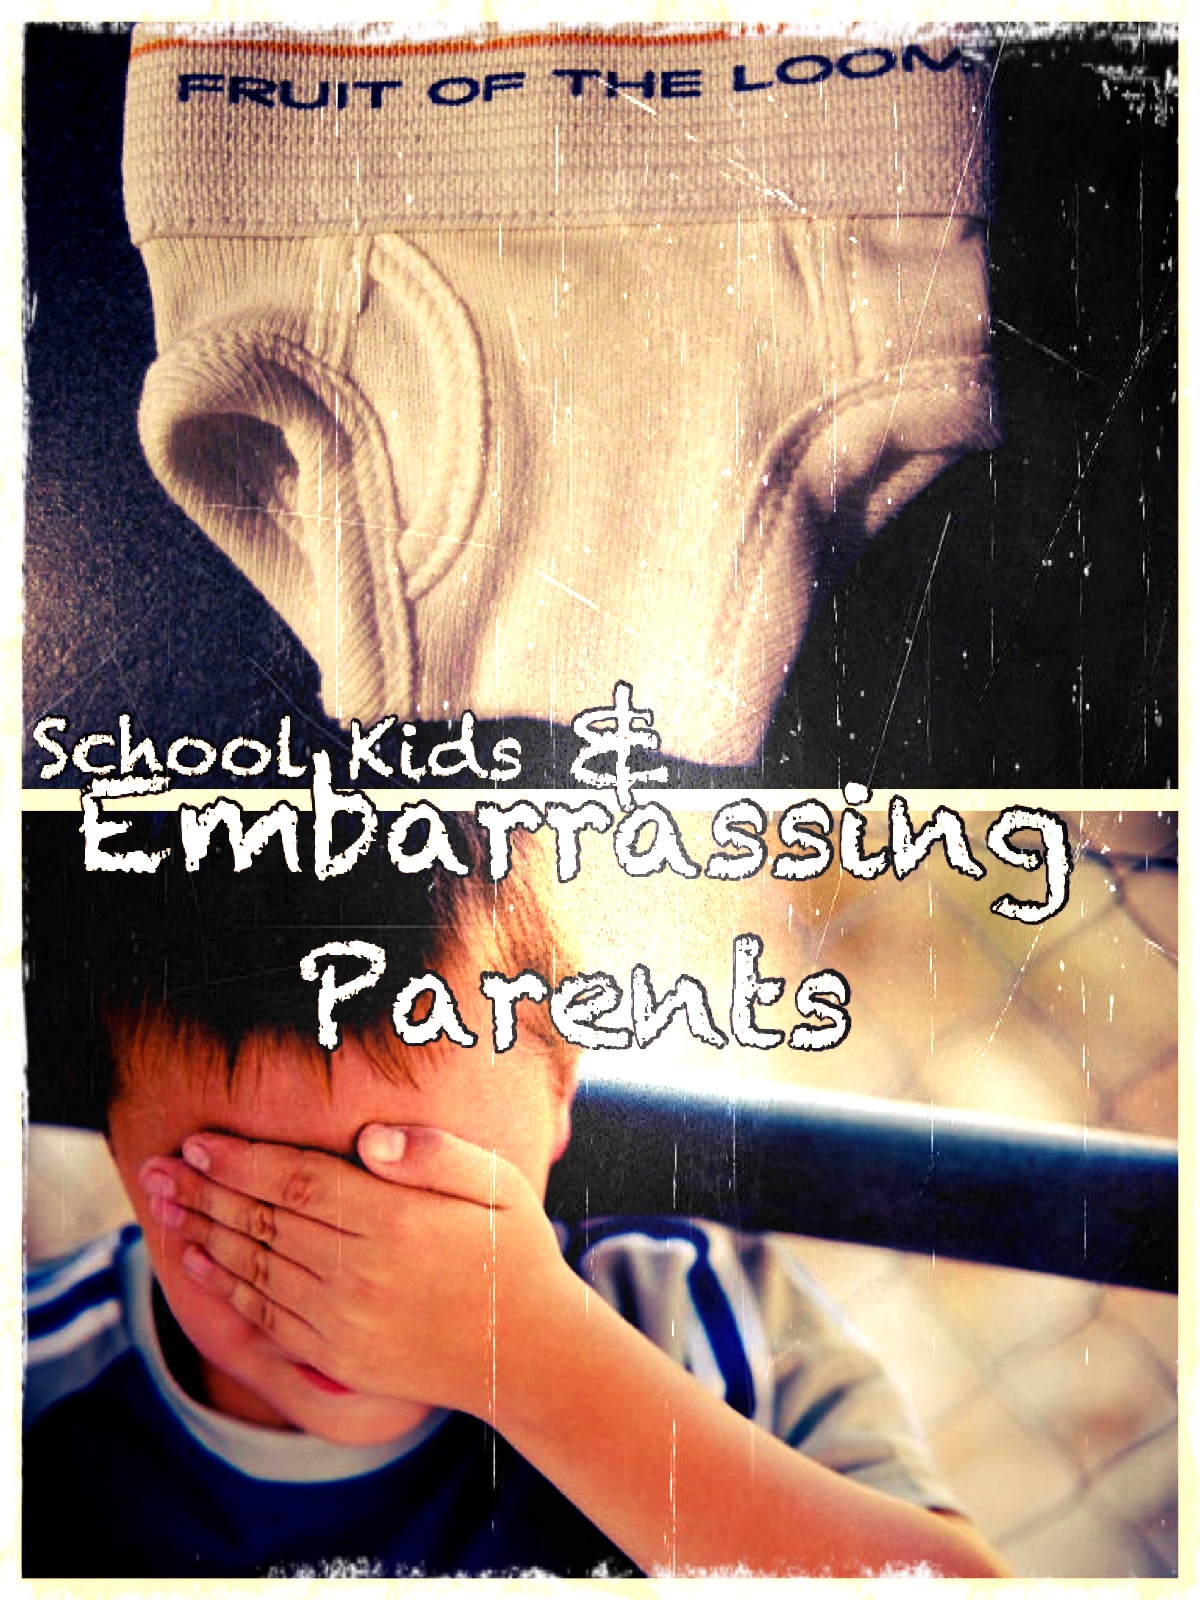 School Kids, Embarrassing Parents & A Horror Show – Pastor's